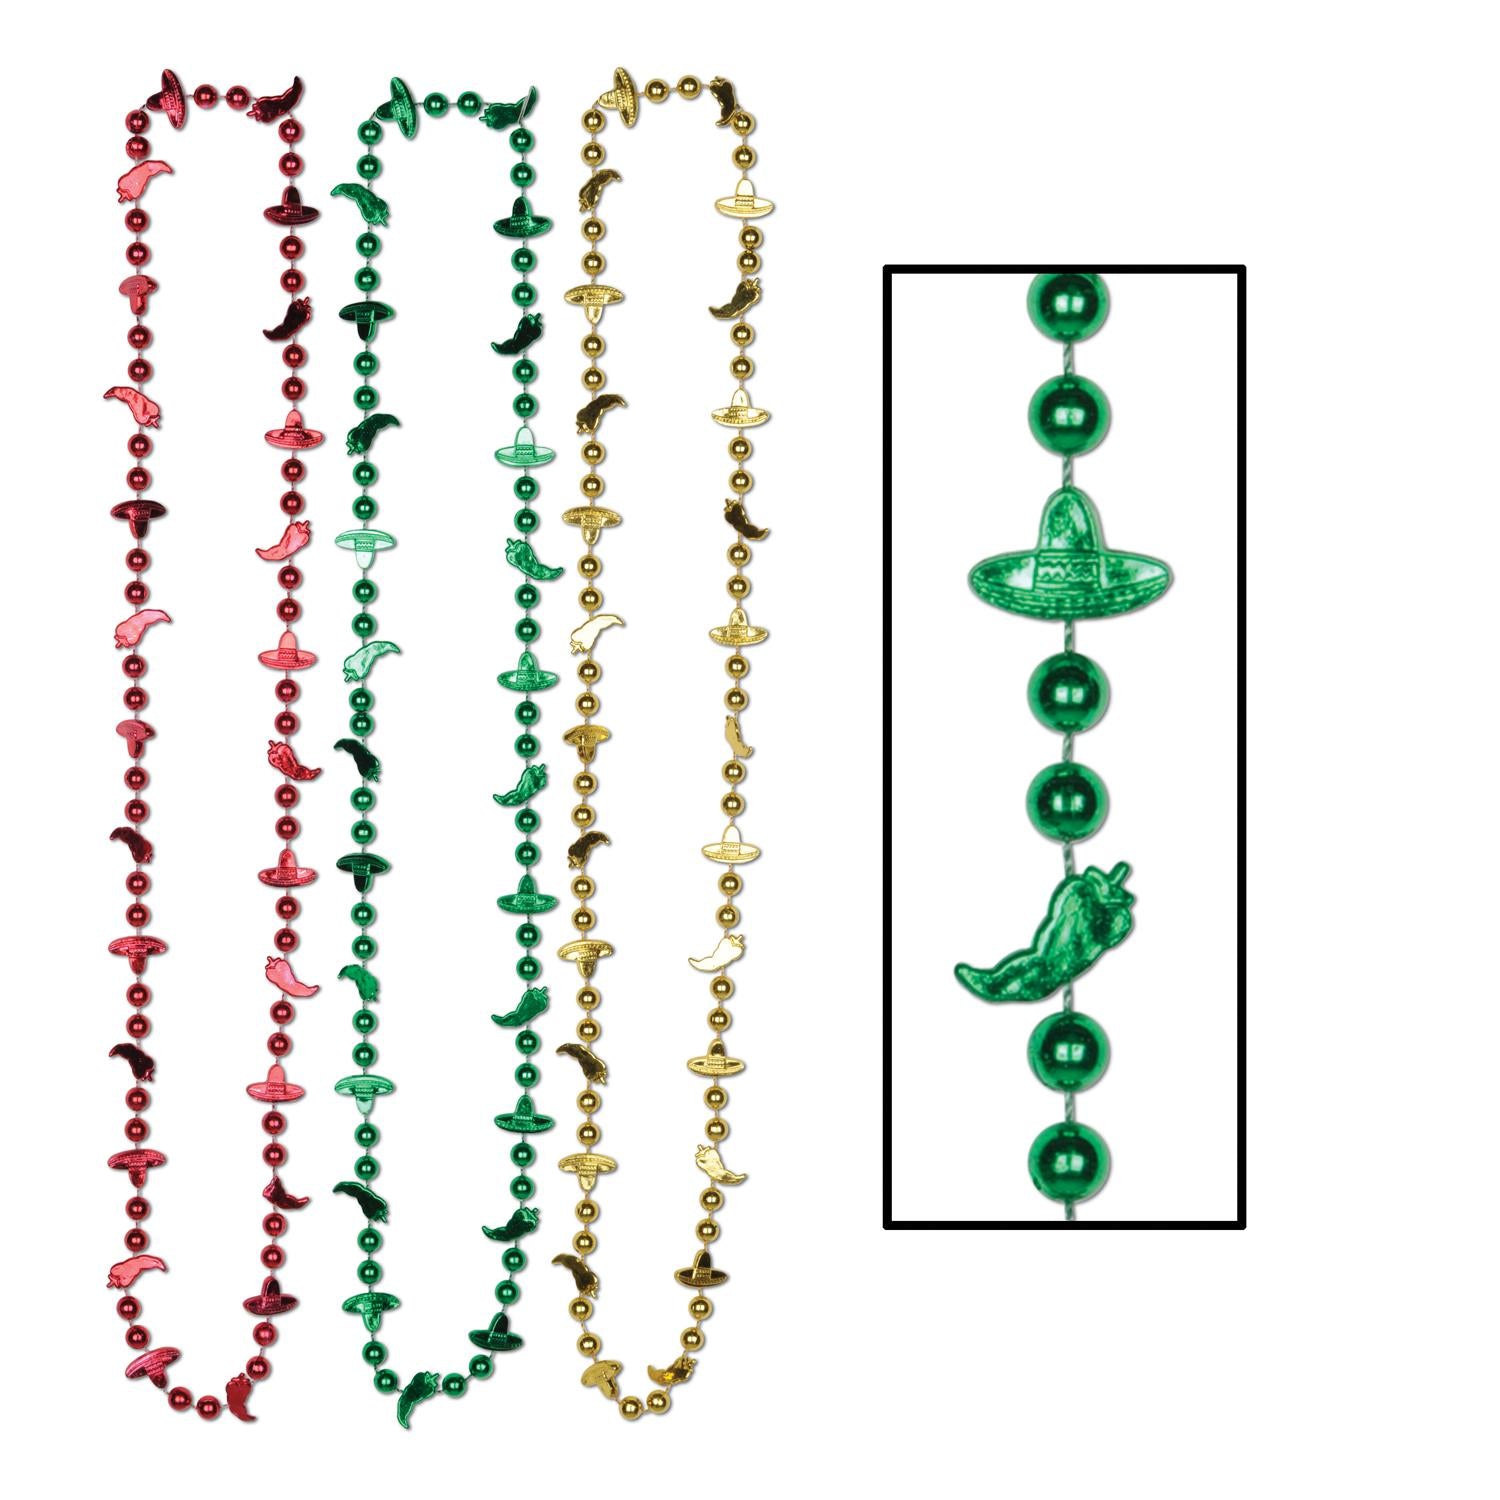 Beistle Fiesta Bead Necklaces - Assorted colors (6/Pkg)